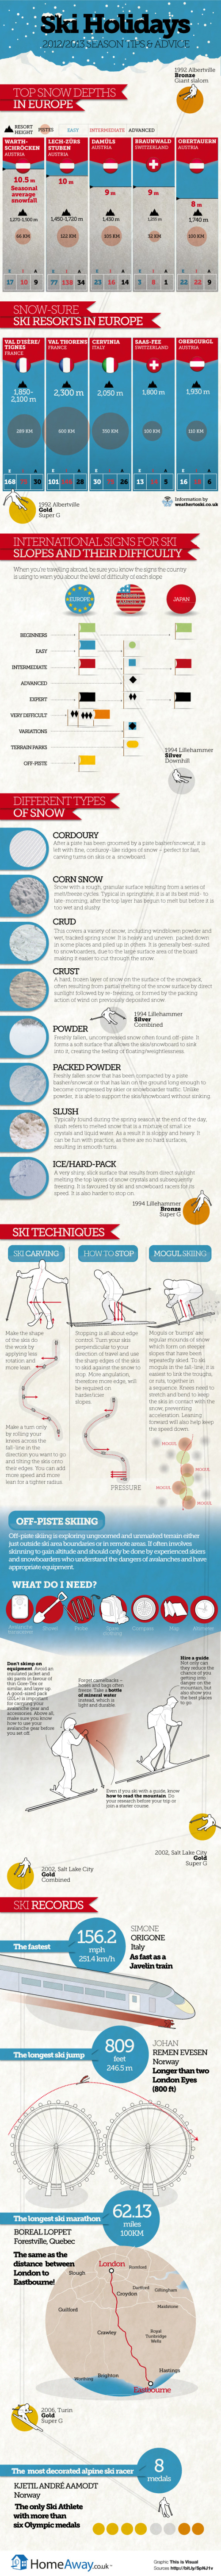 Ski Holidays 2013 infographic